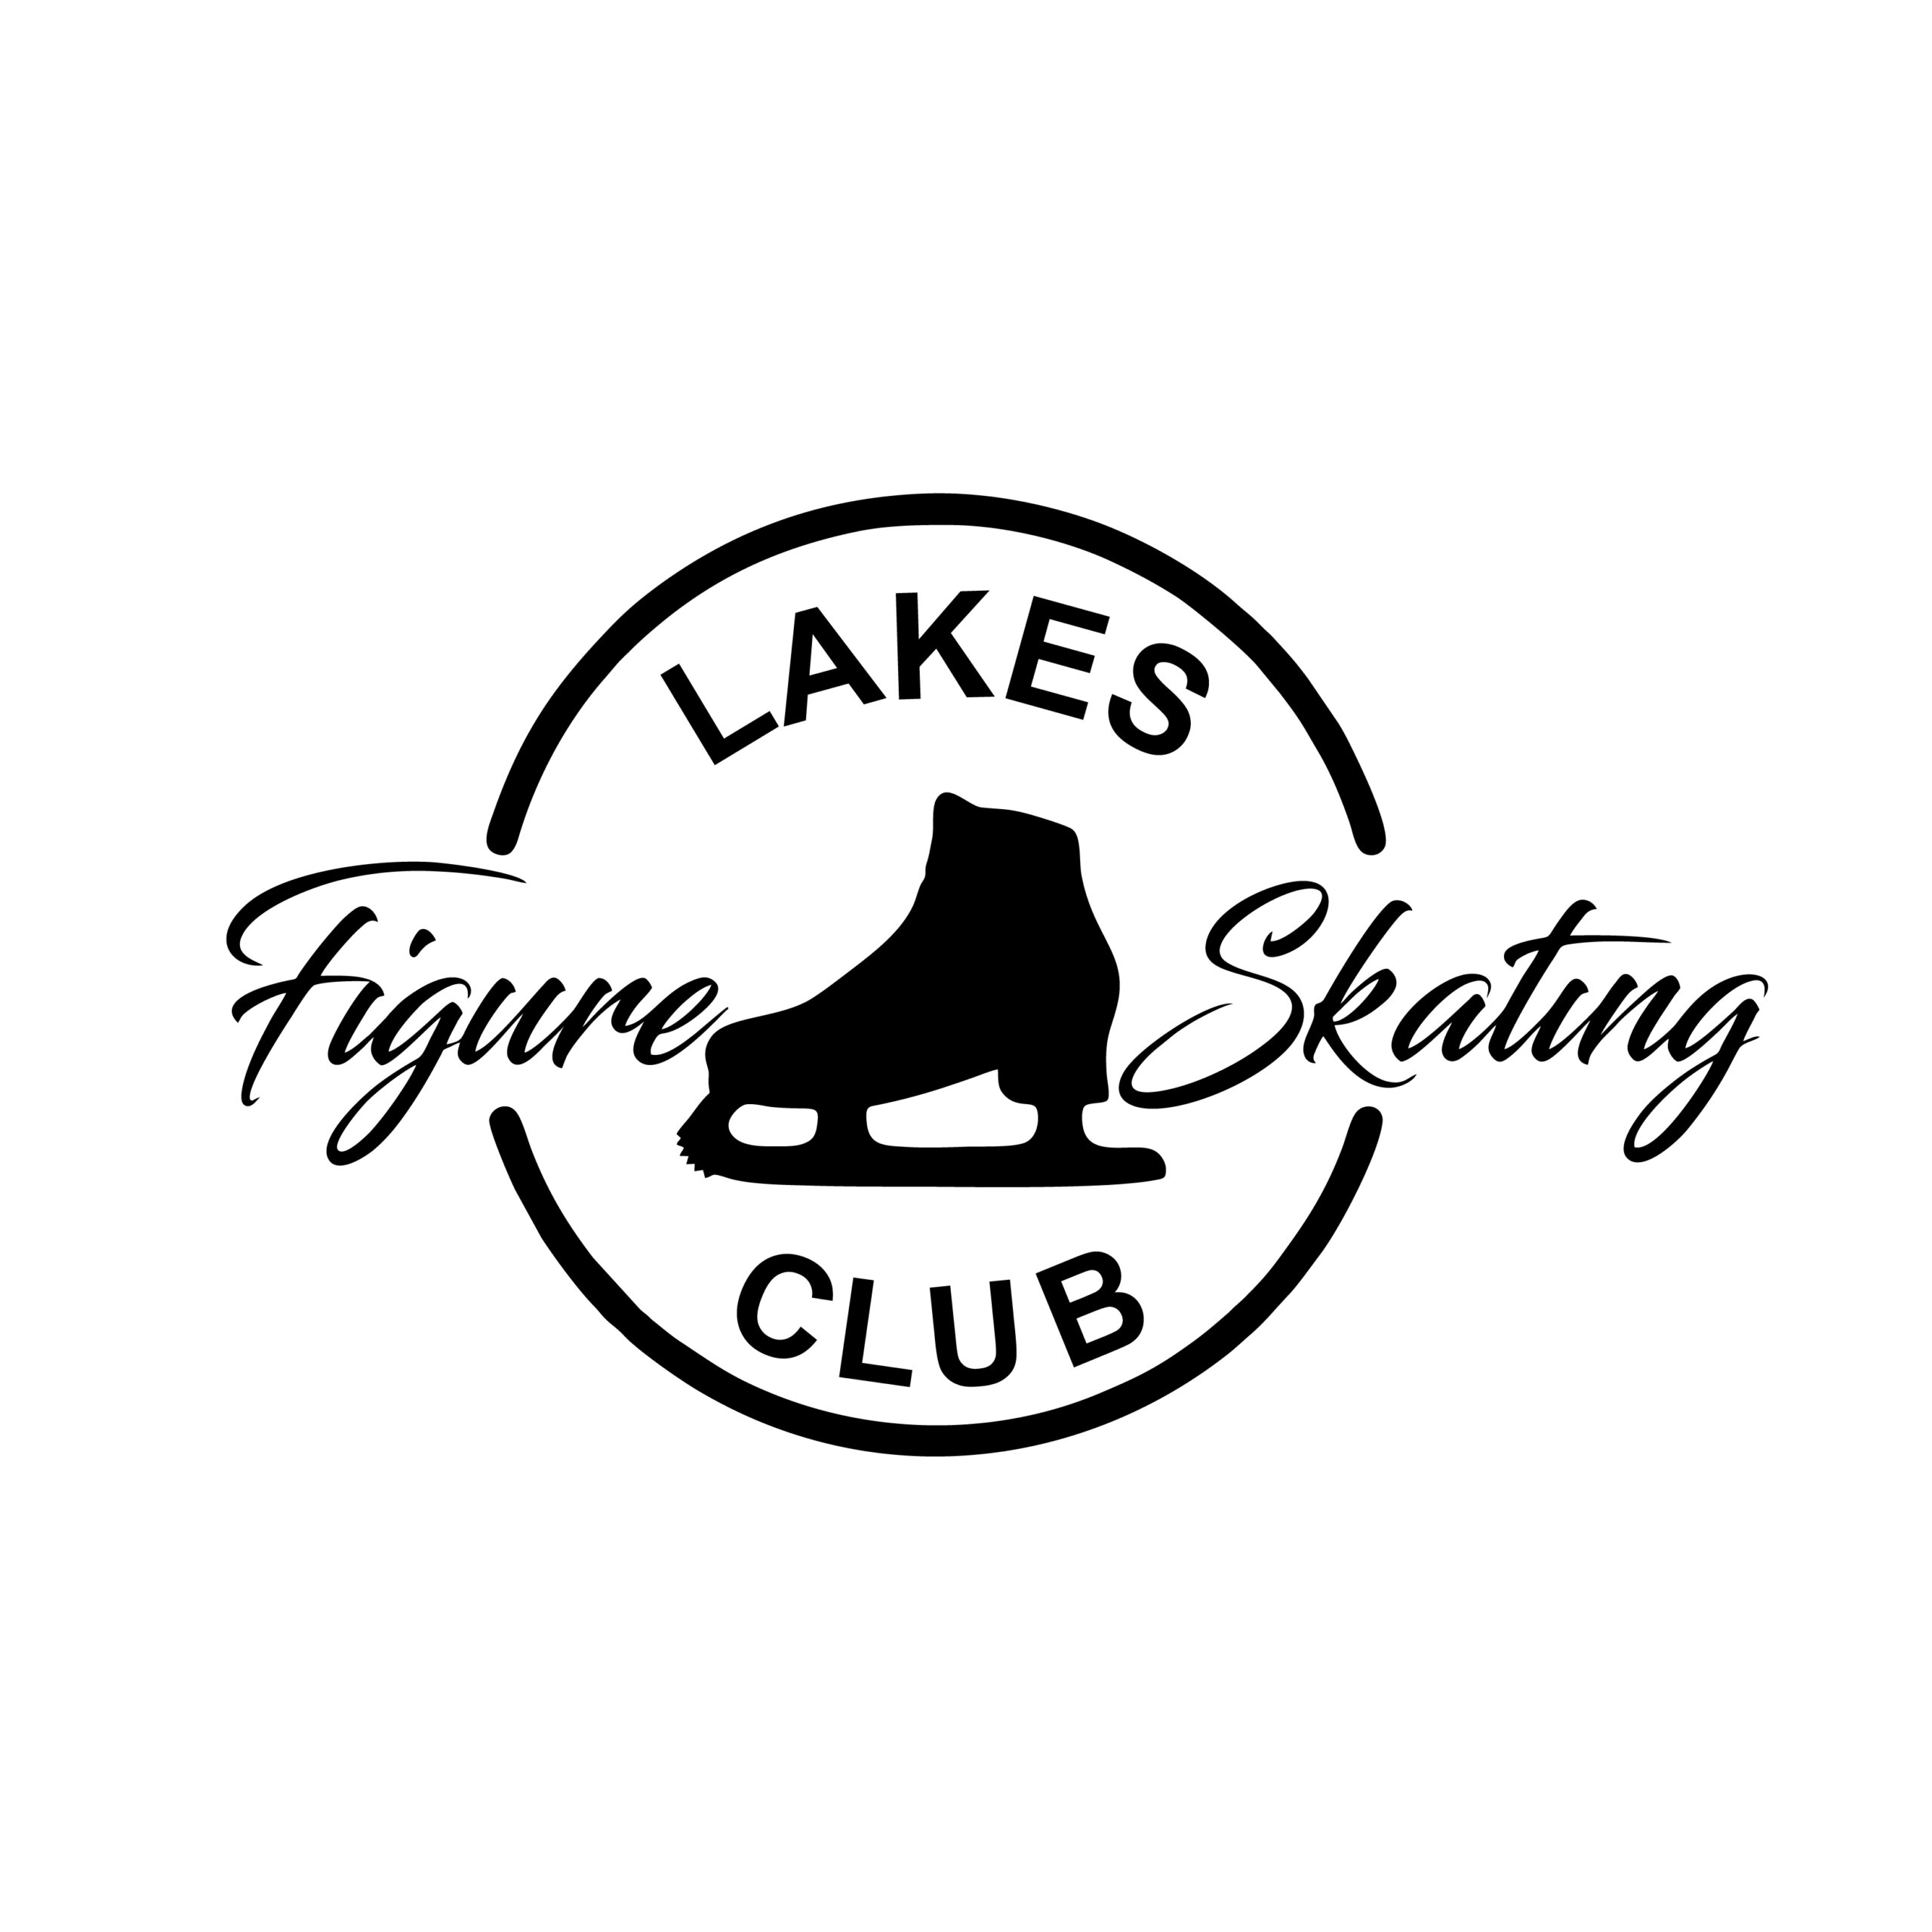 Lakes Figure Skating Club - Detroit Lakes MN - LakesFSC